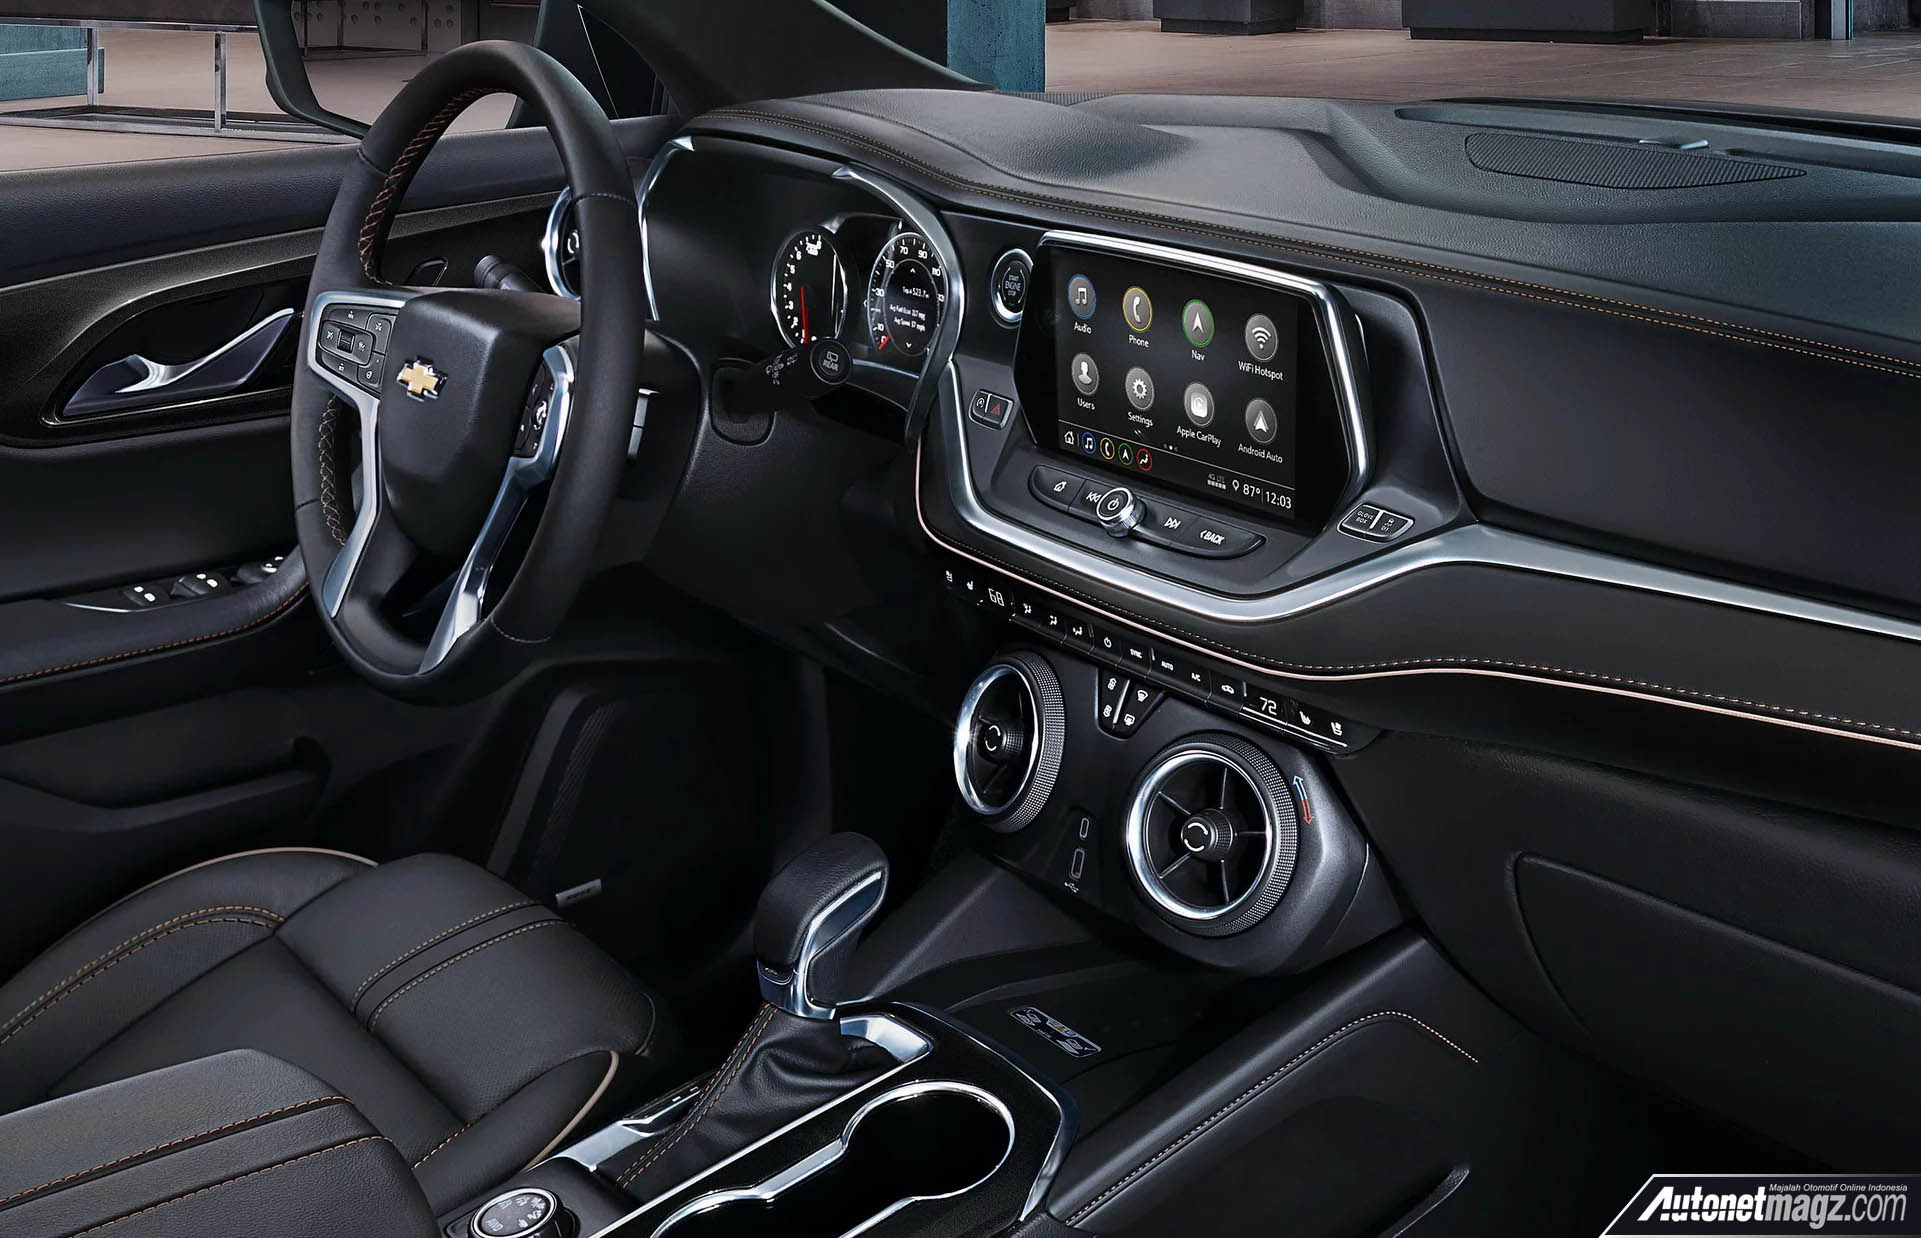 Dashboard Chevrolet Blazer 2019 AutonetMagz Review Mobil Dan Motor Baru Indonesia